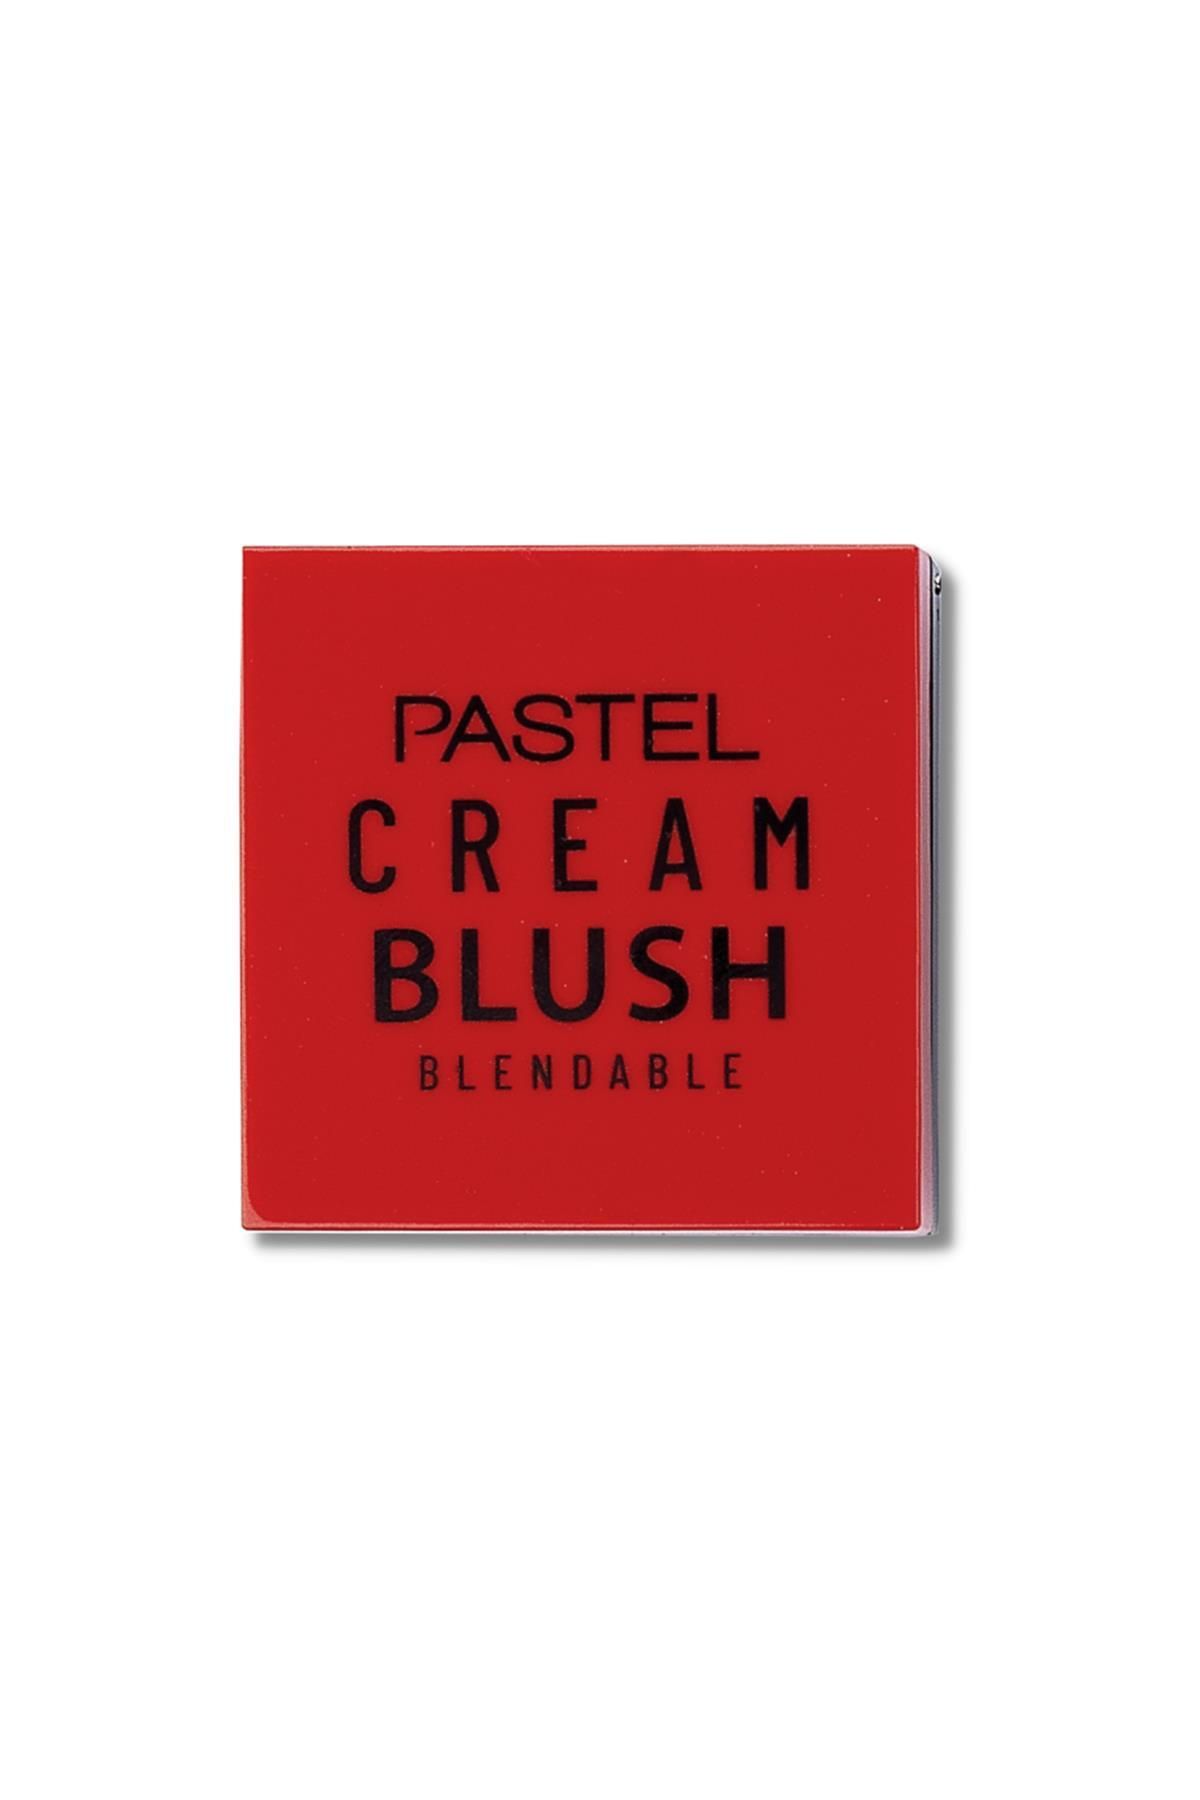 Pastel Cream Blush - Krem Allık 43 Scarlett